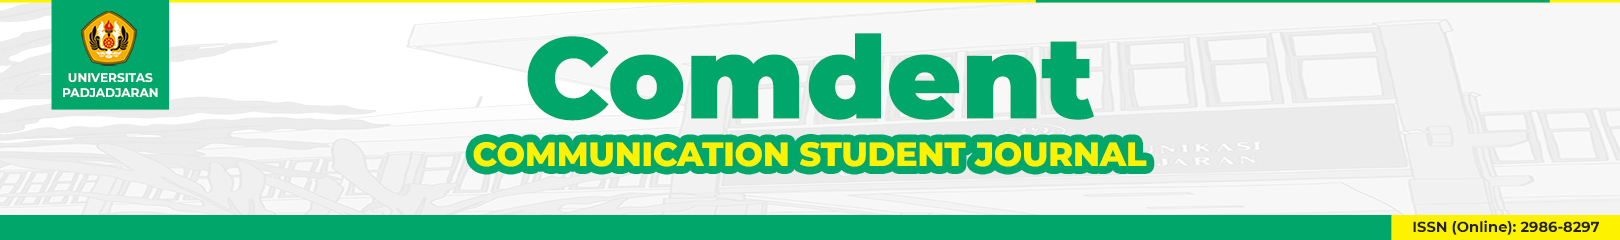 Comdent: Communication Student Journal